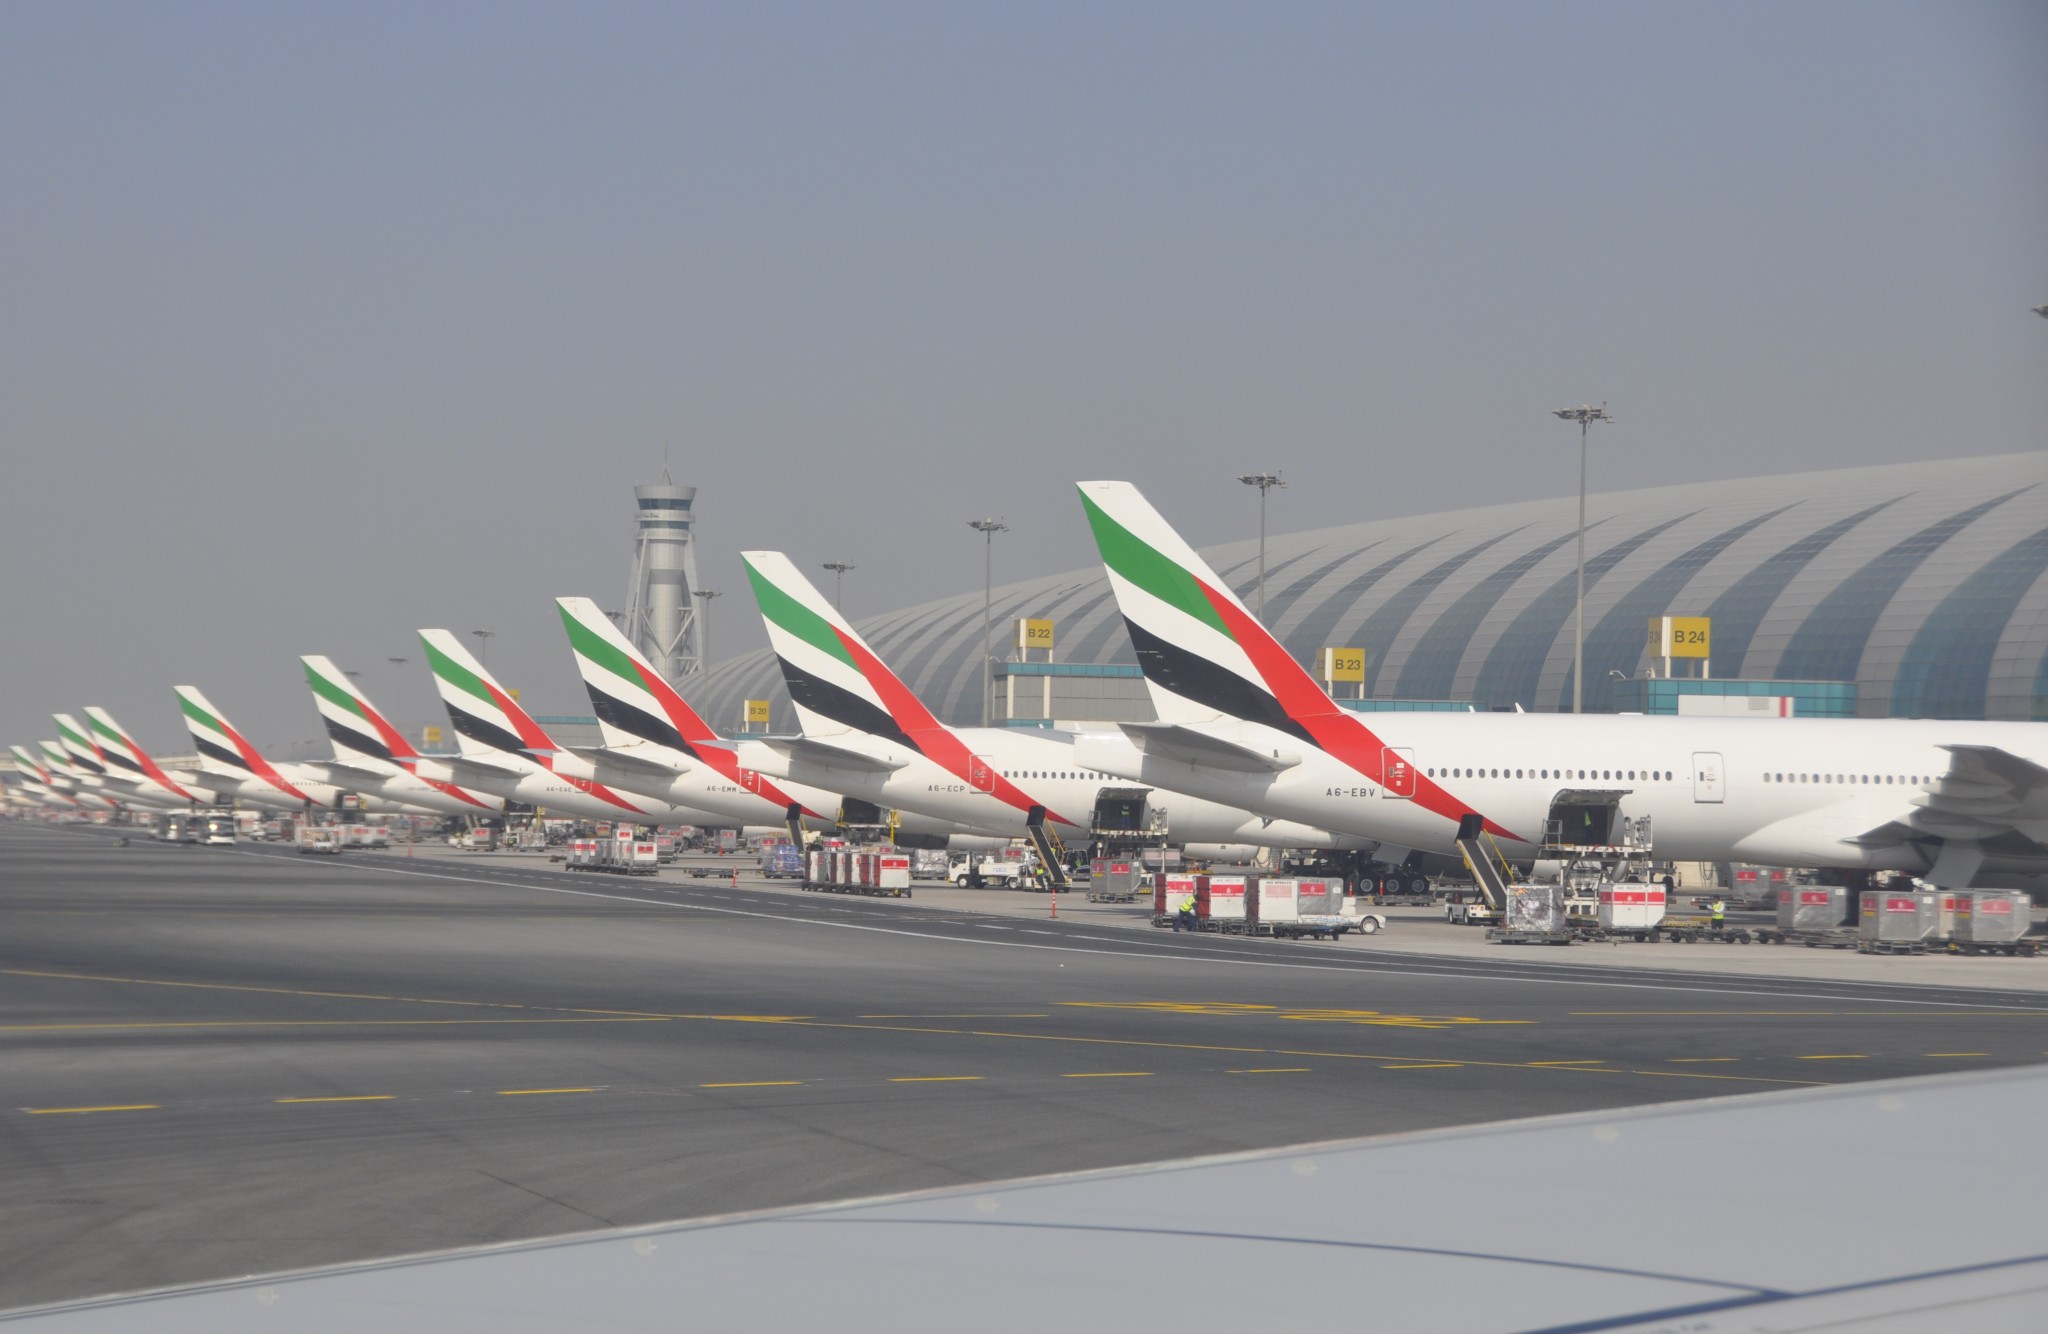 Dubai International Airport surpasses pre-pandemic passenger traffic in Q3 2022